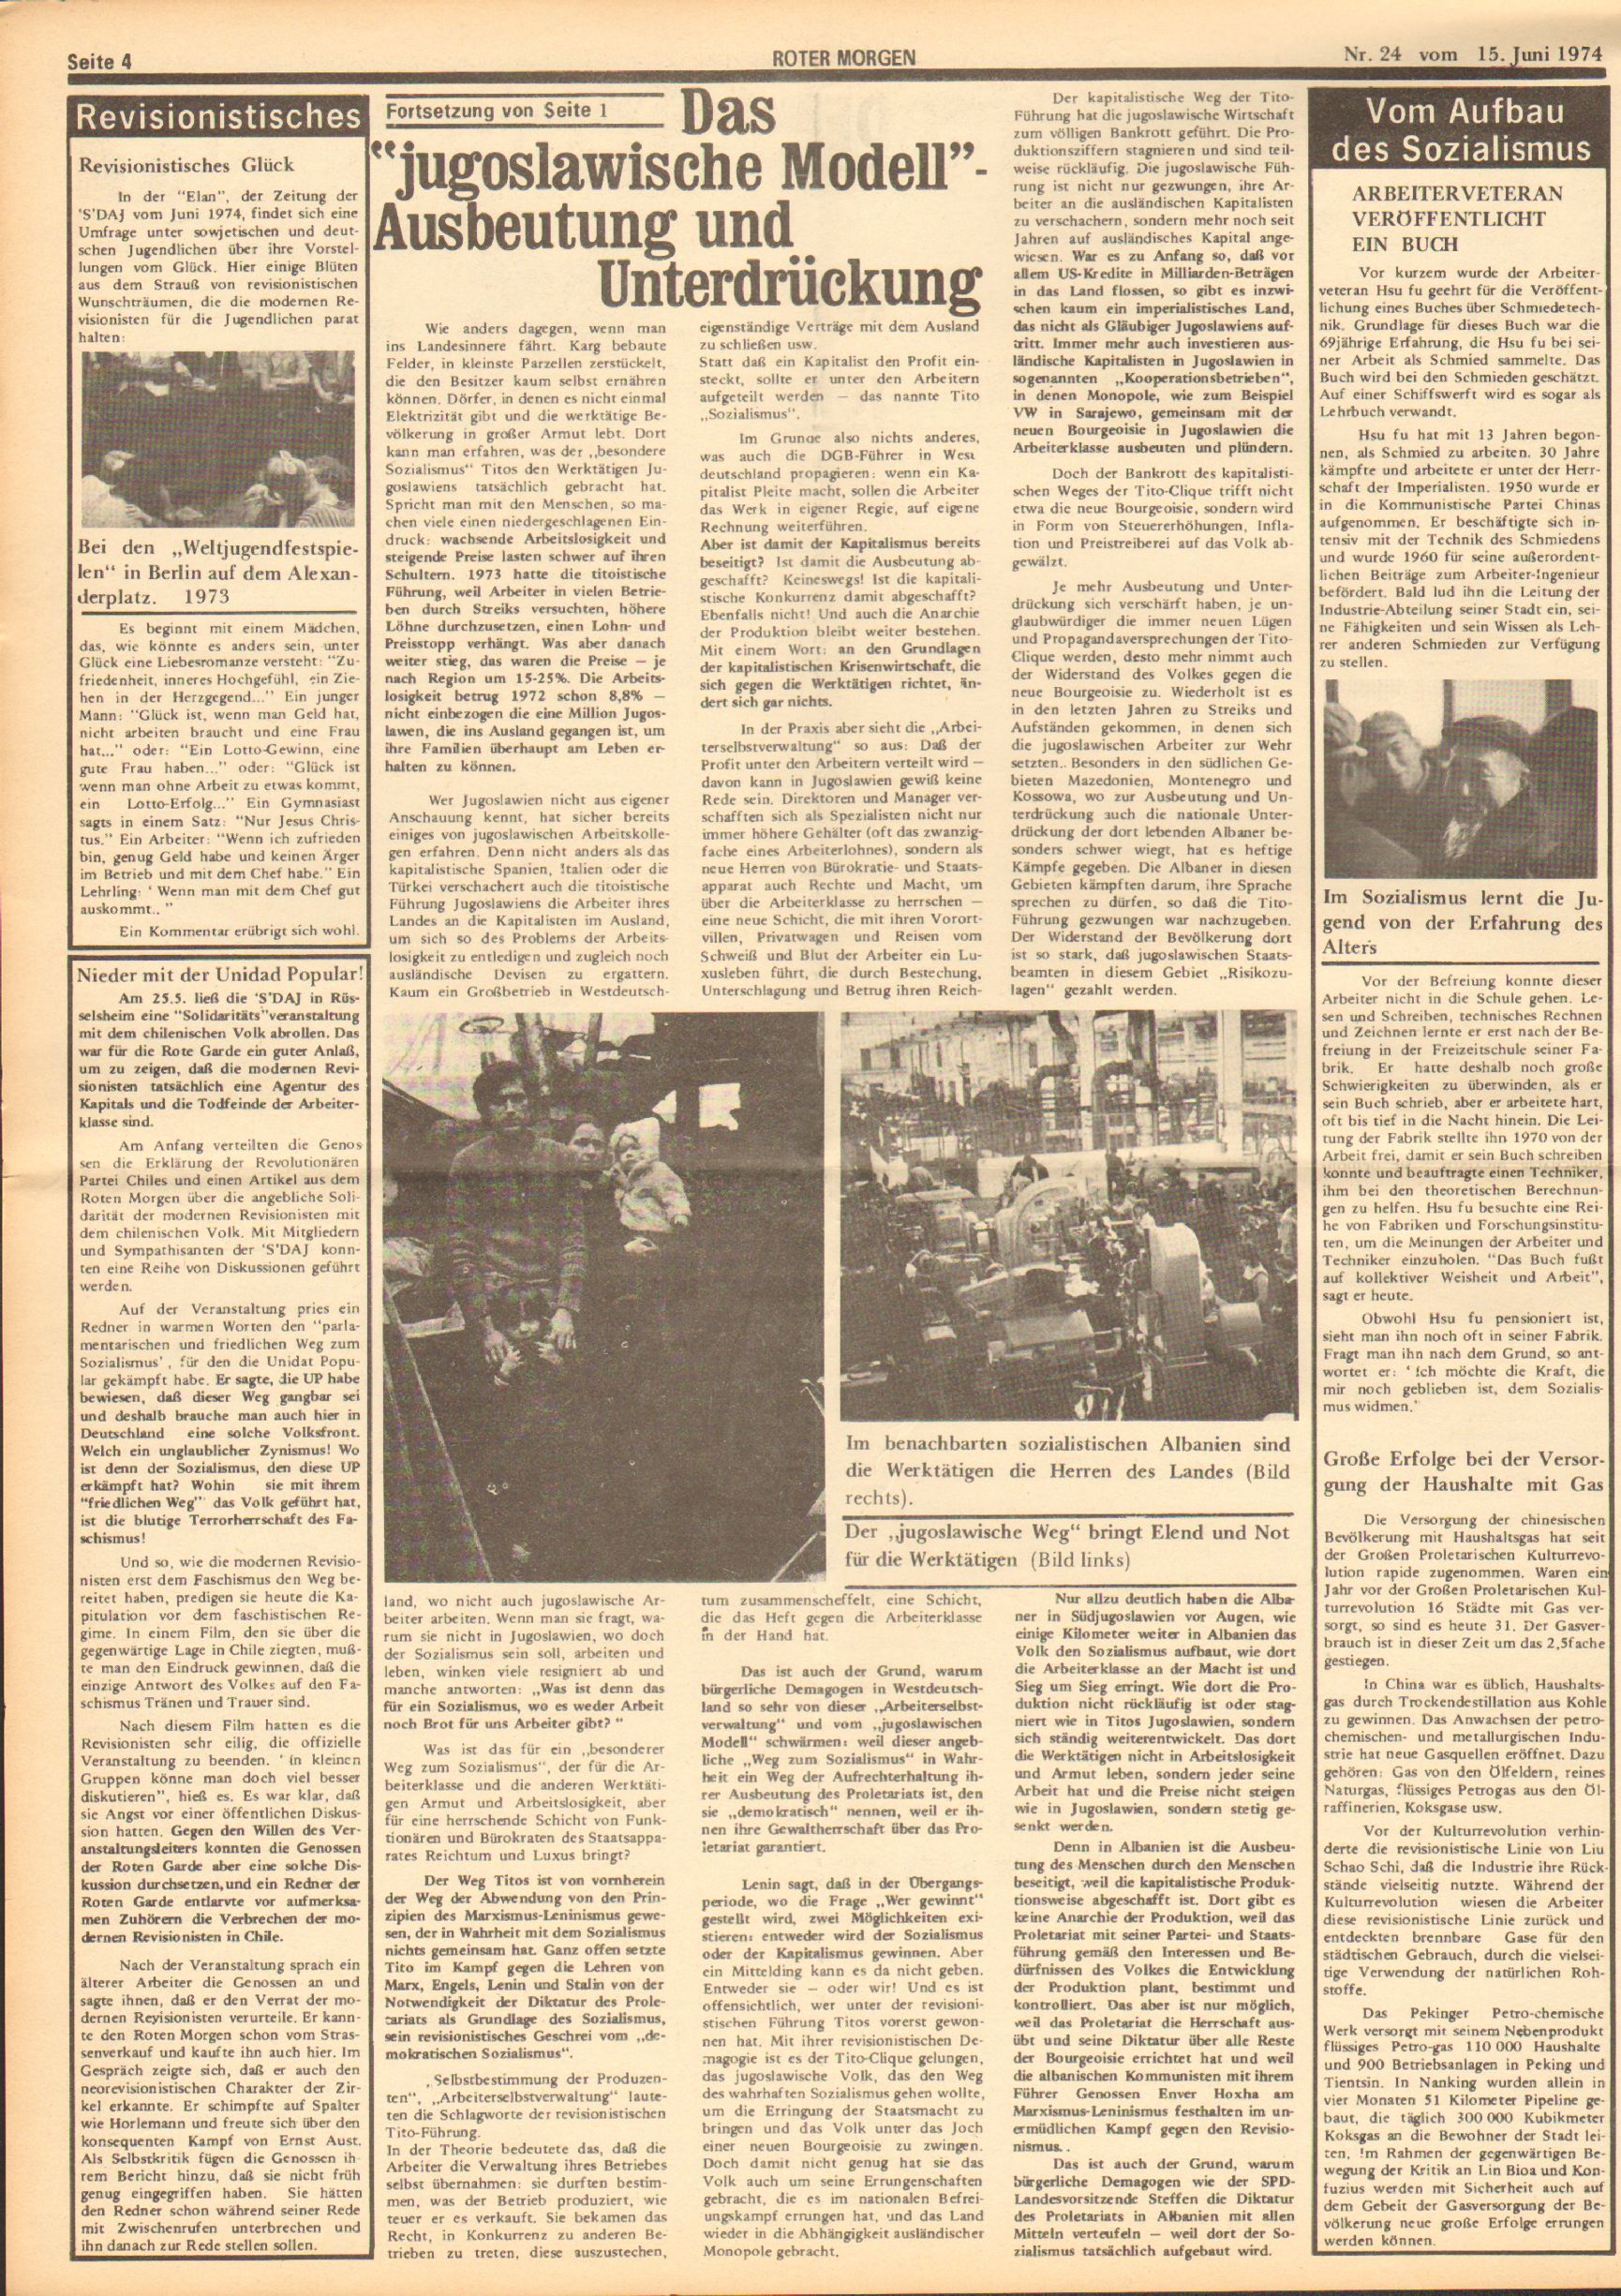 Roter Morgen, 8. Jg., 15. Juni 1974, Nr. 24, Seite 4